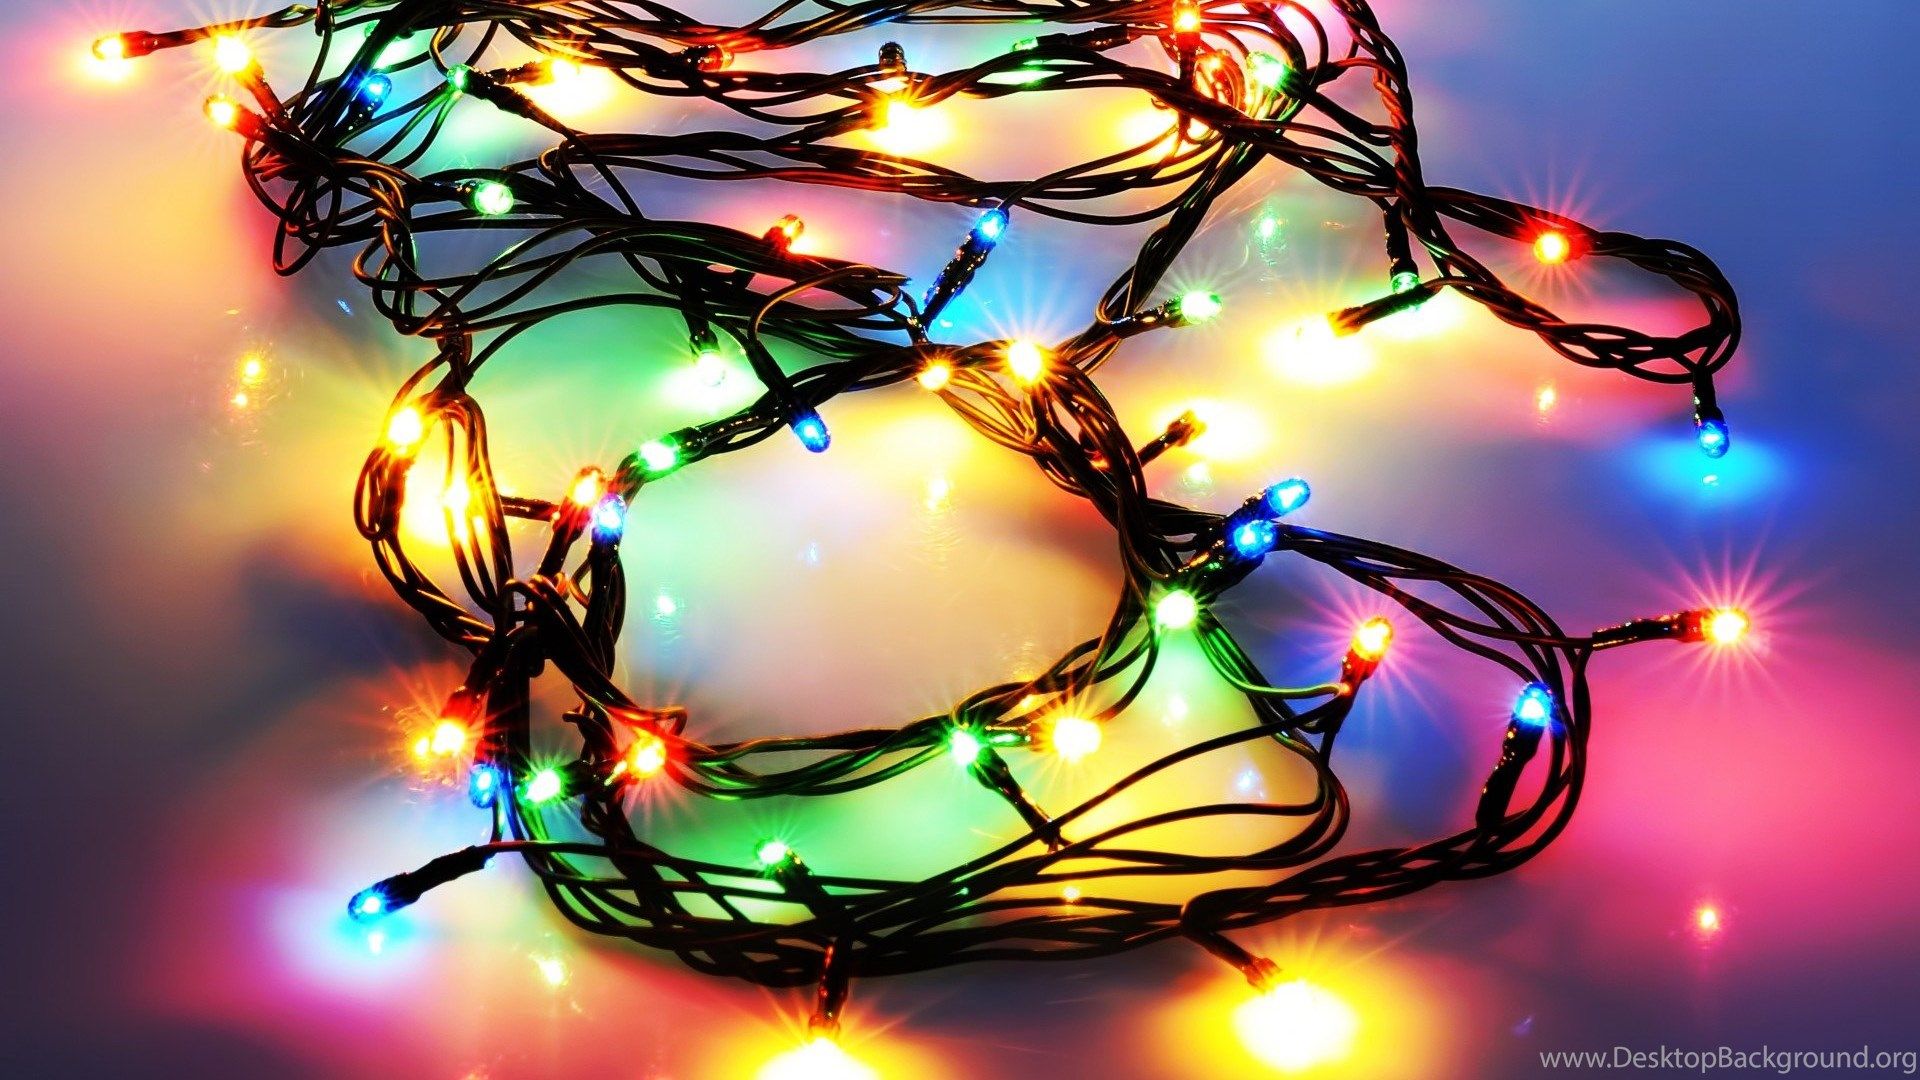 Holidays Christmas Lights Seasonal Colors Shine Sparkle Wallpaper. Desktop Background